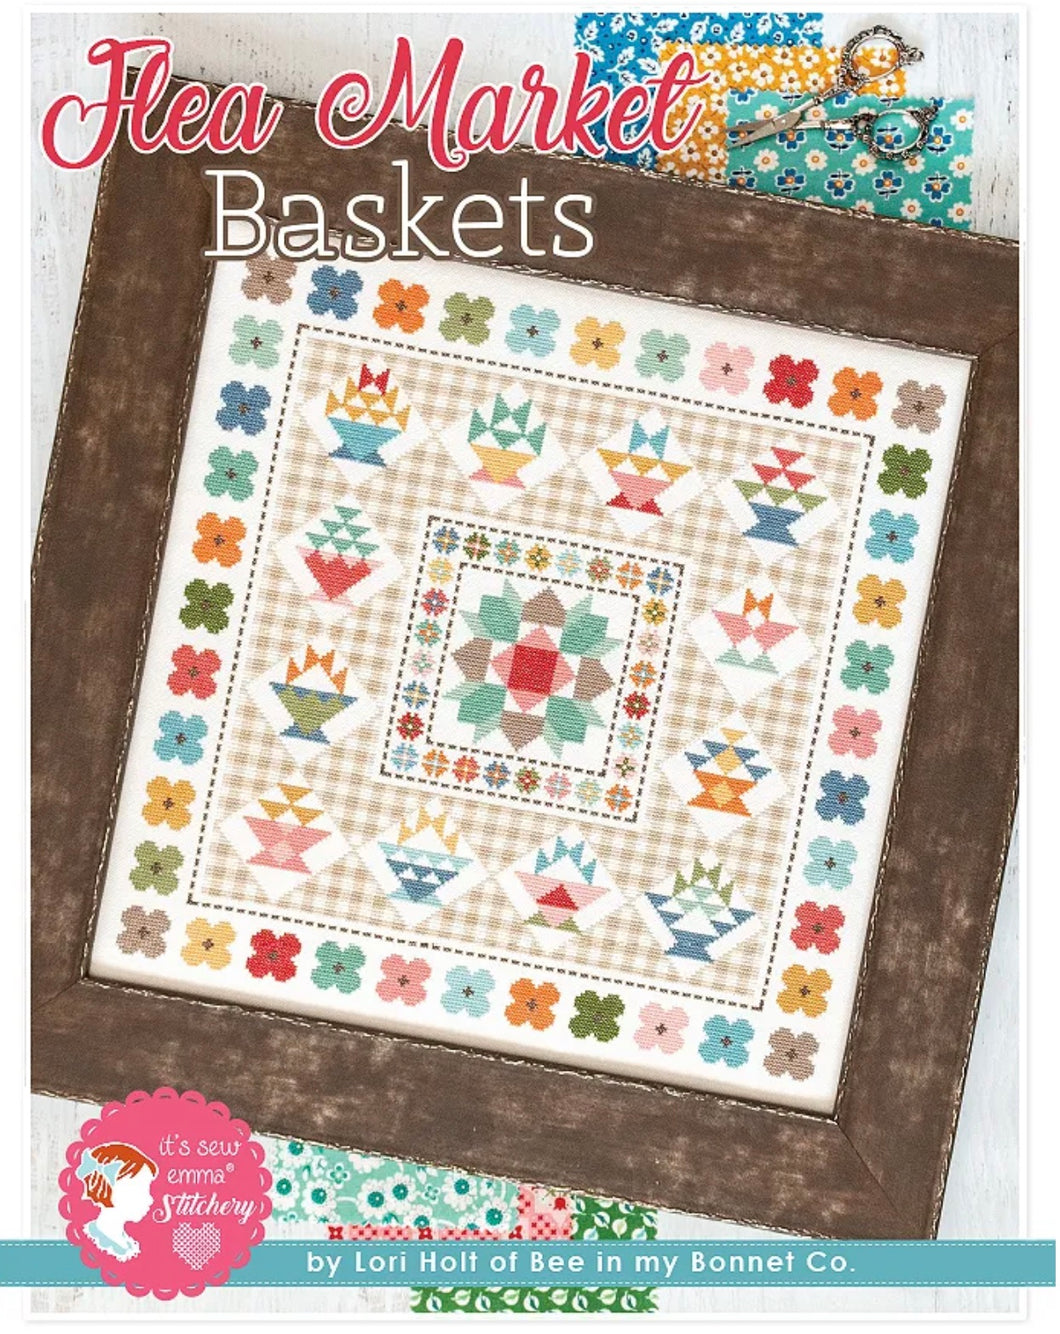 Flea Market Baskets Cross Stitch Pattern by Lori Holt